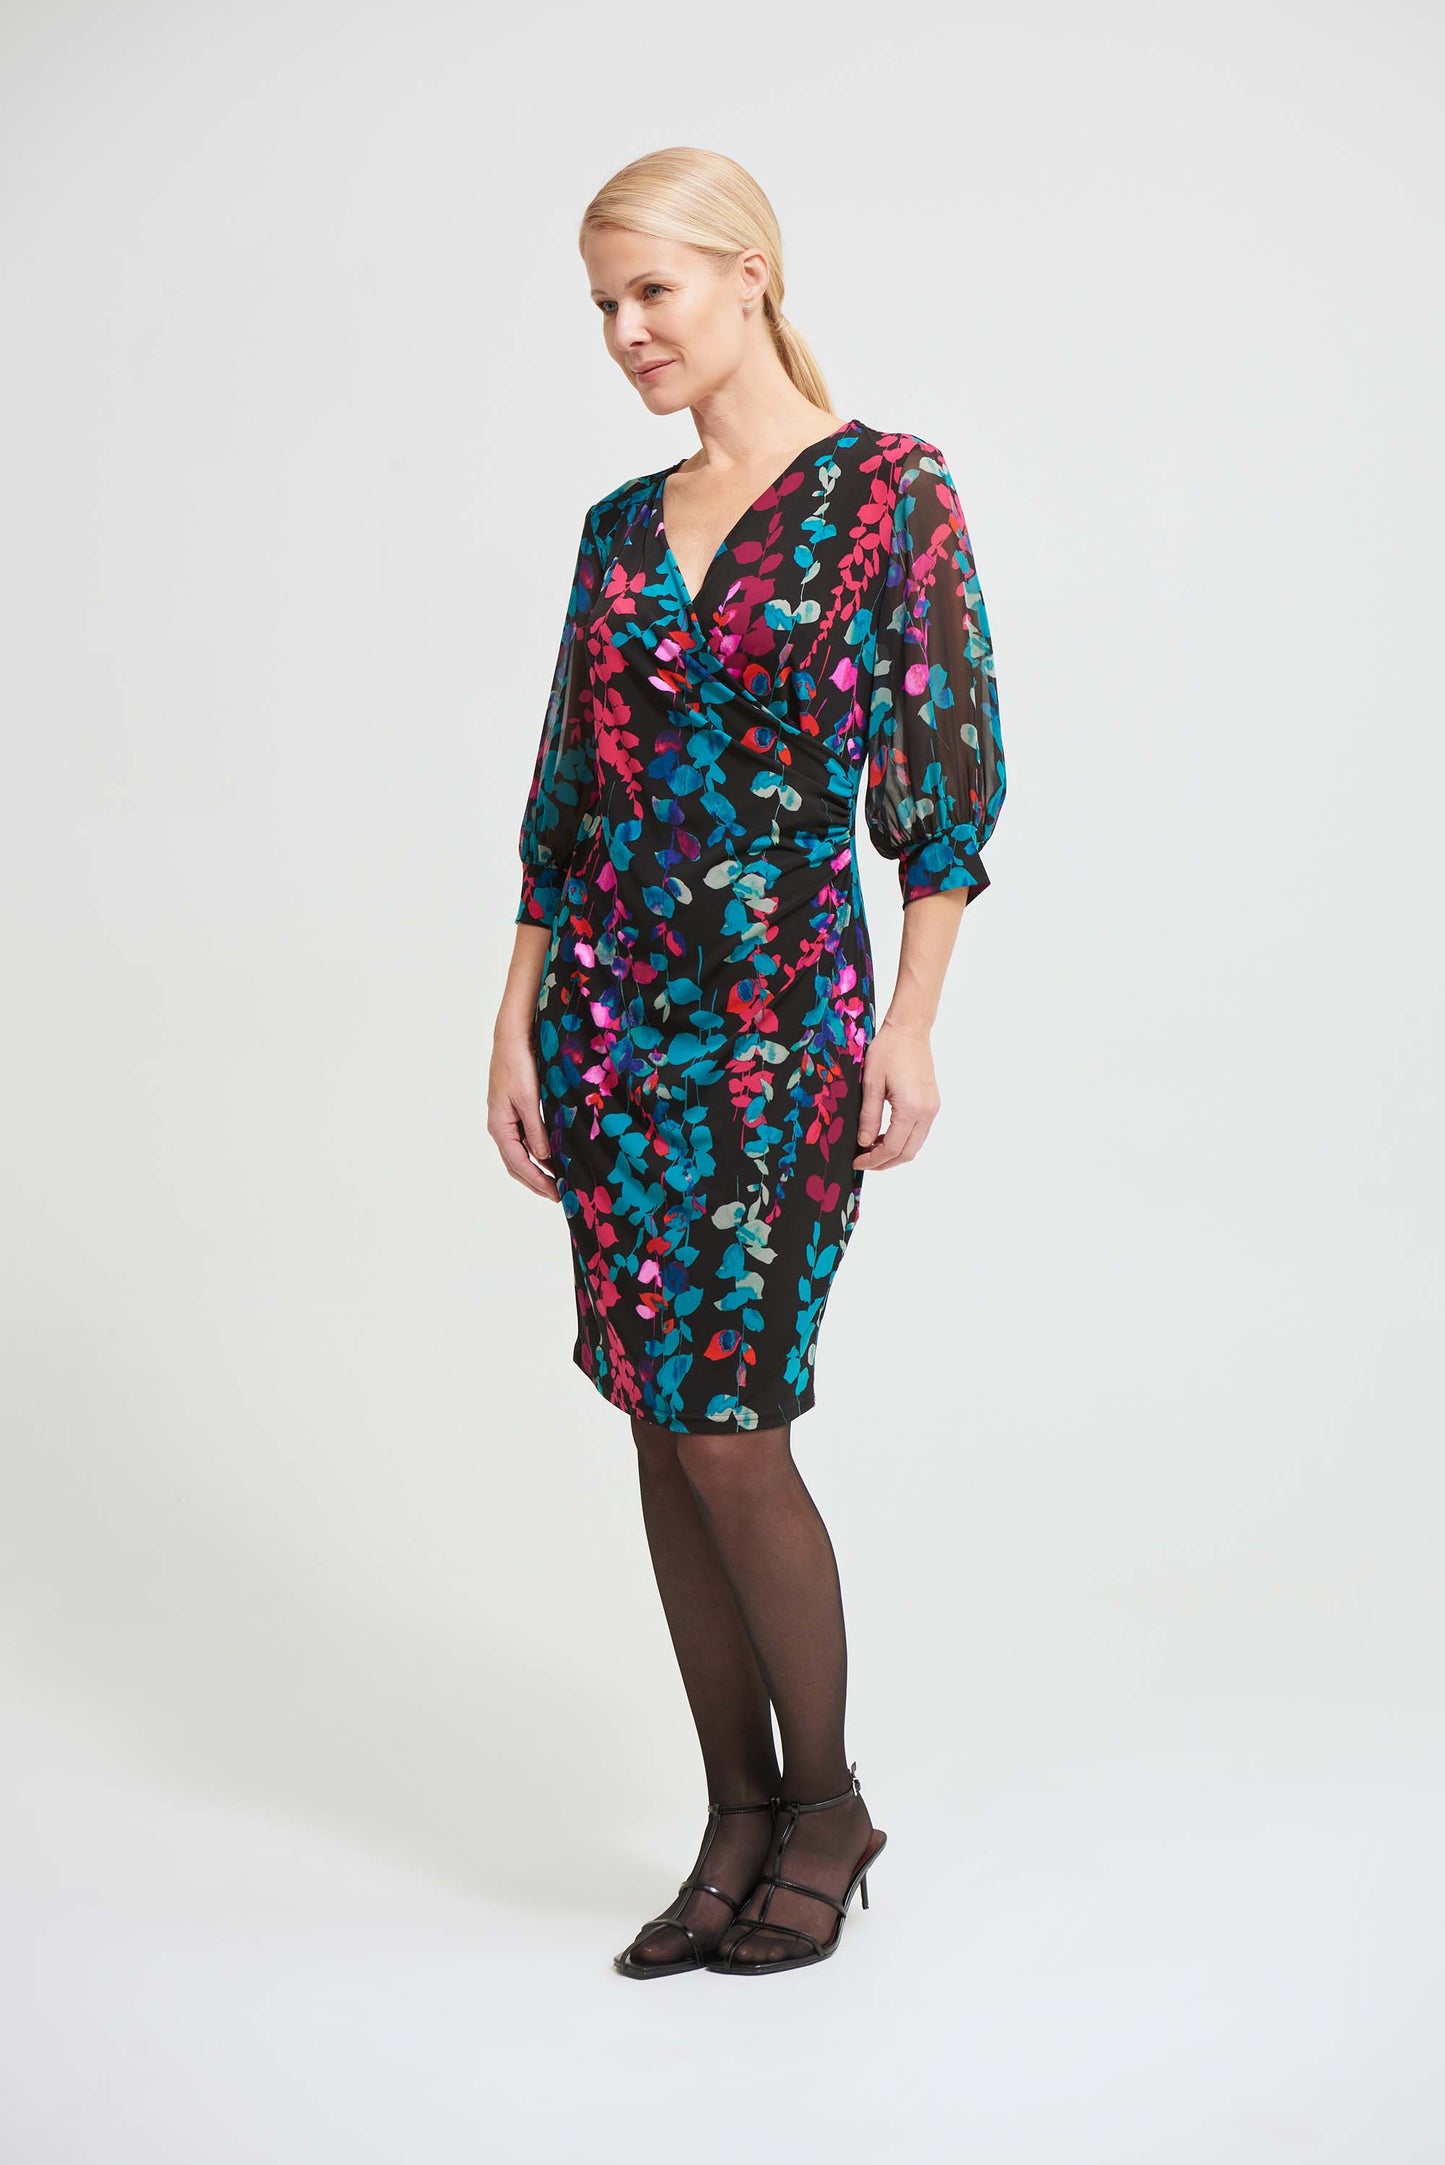 Joseph Ribkoff - Dress - Style 213414 - 50% Off